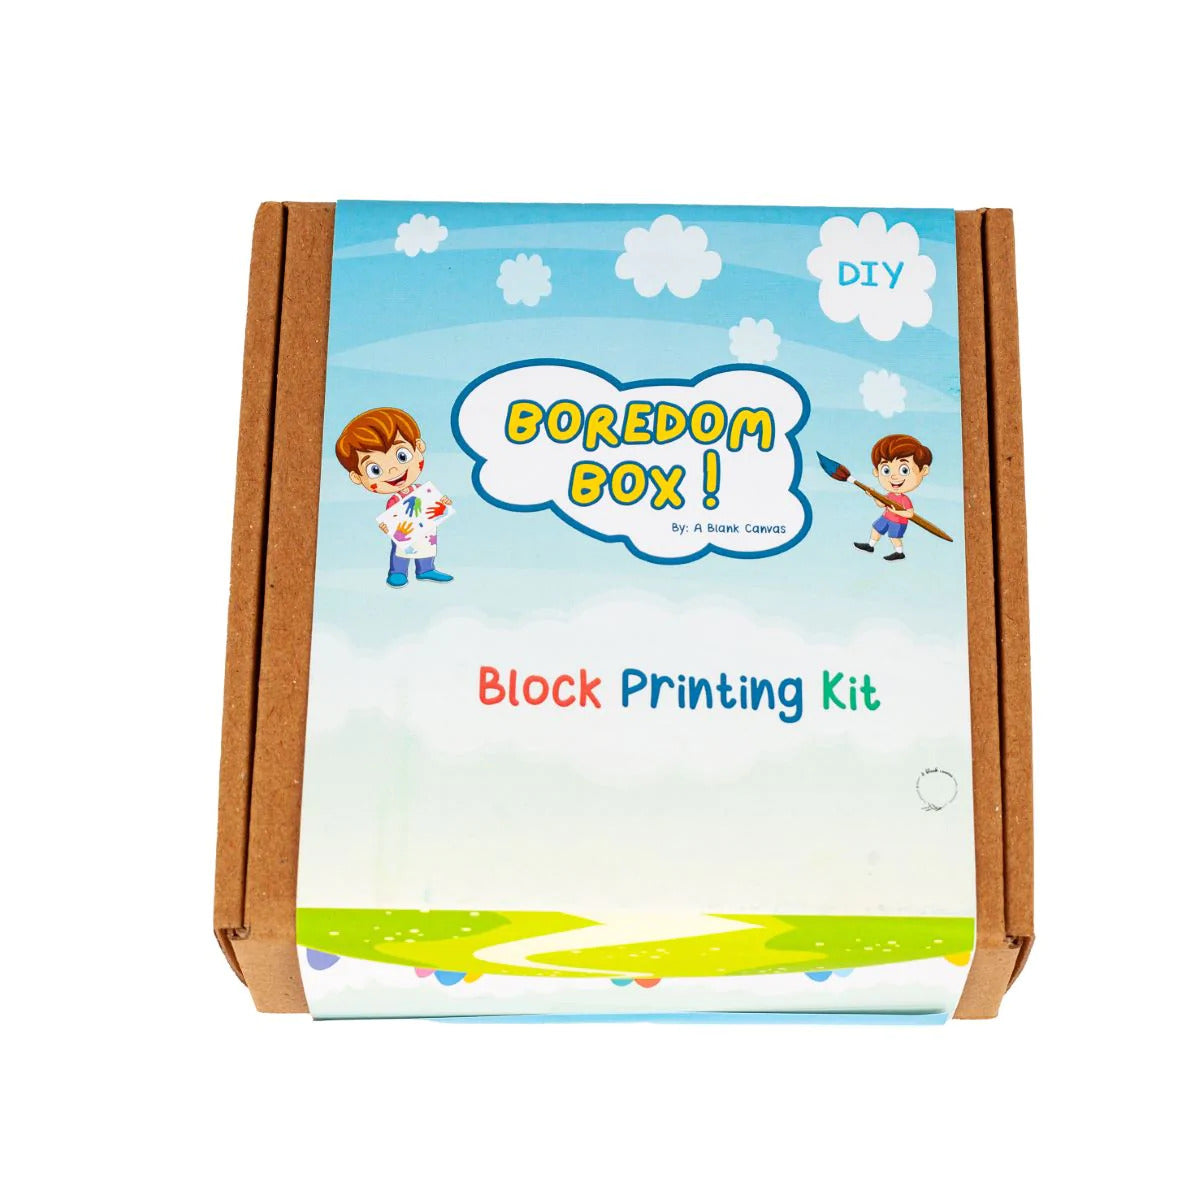 DIY Block Printing Kit